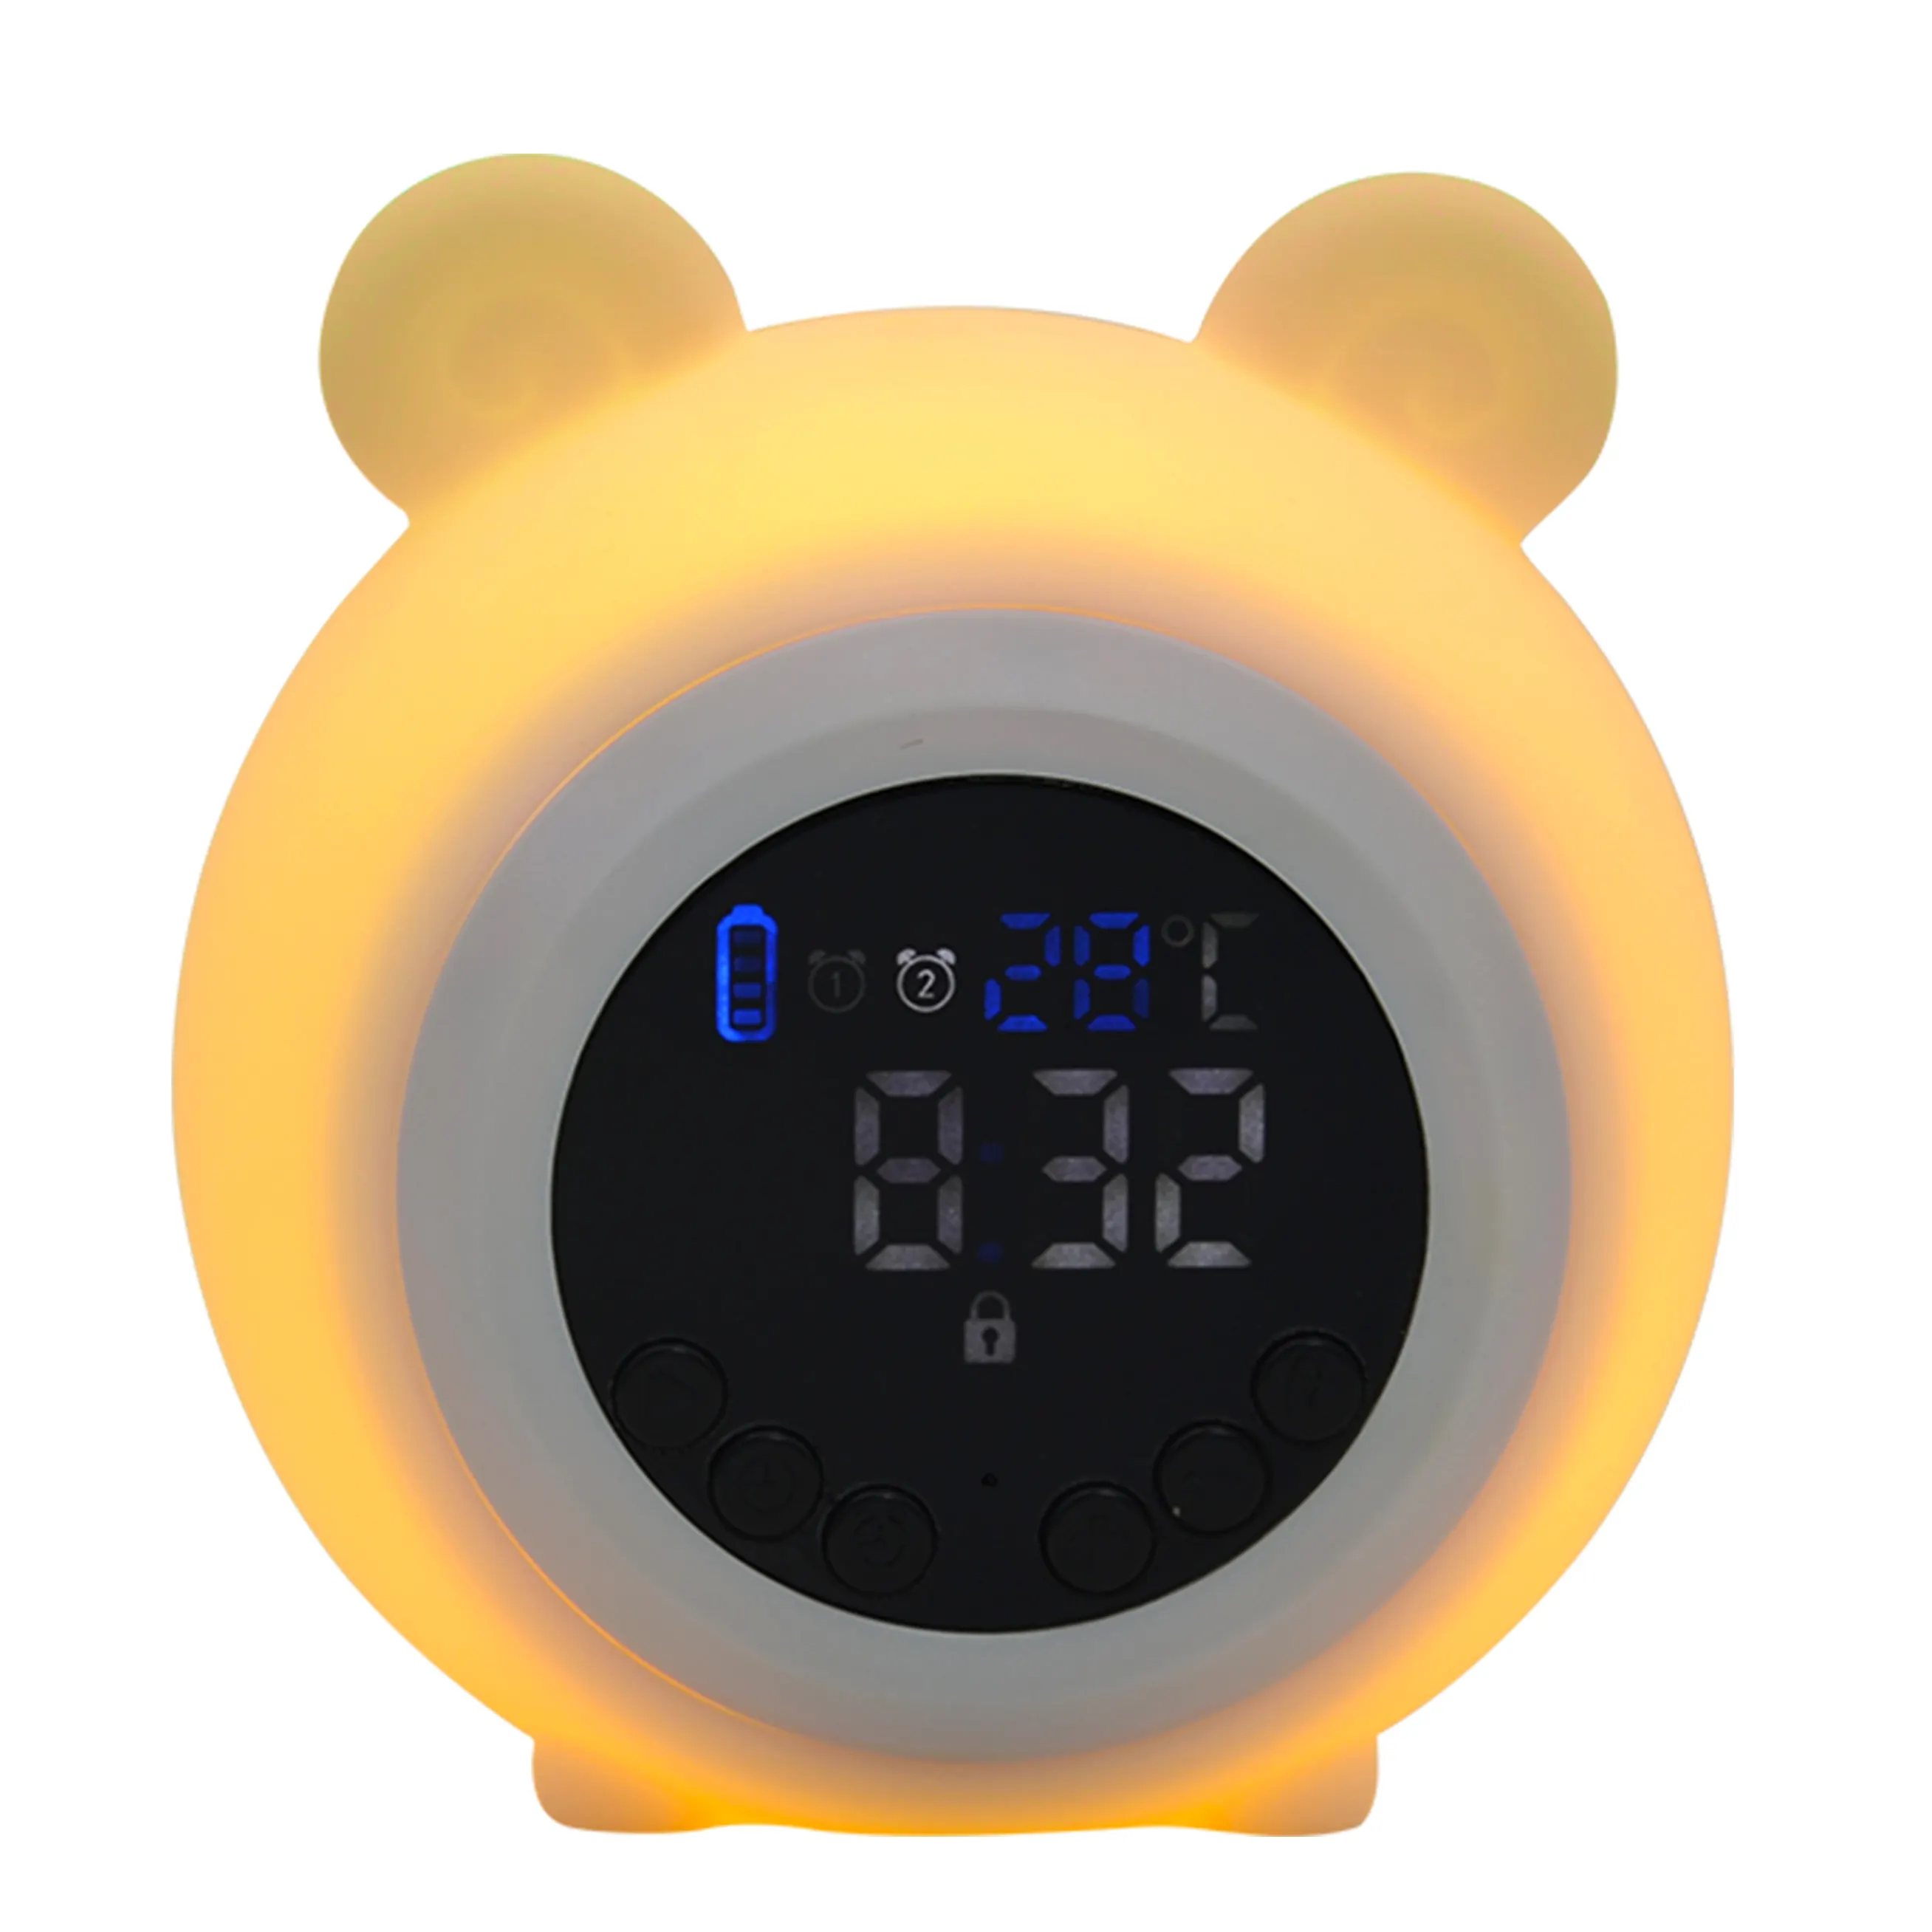 Best Gift Touch Music Control 5 In 1 Bedside Lamp bt Speaker Night Lights With Digital Calendar Alarm Clock